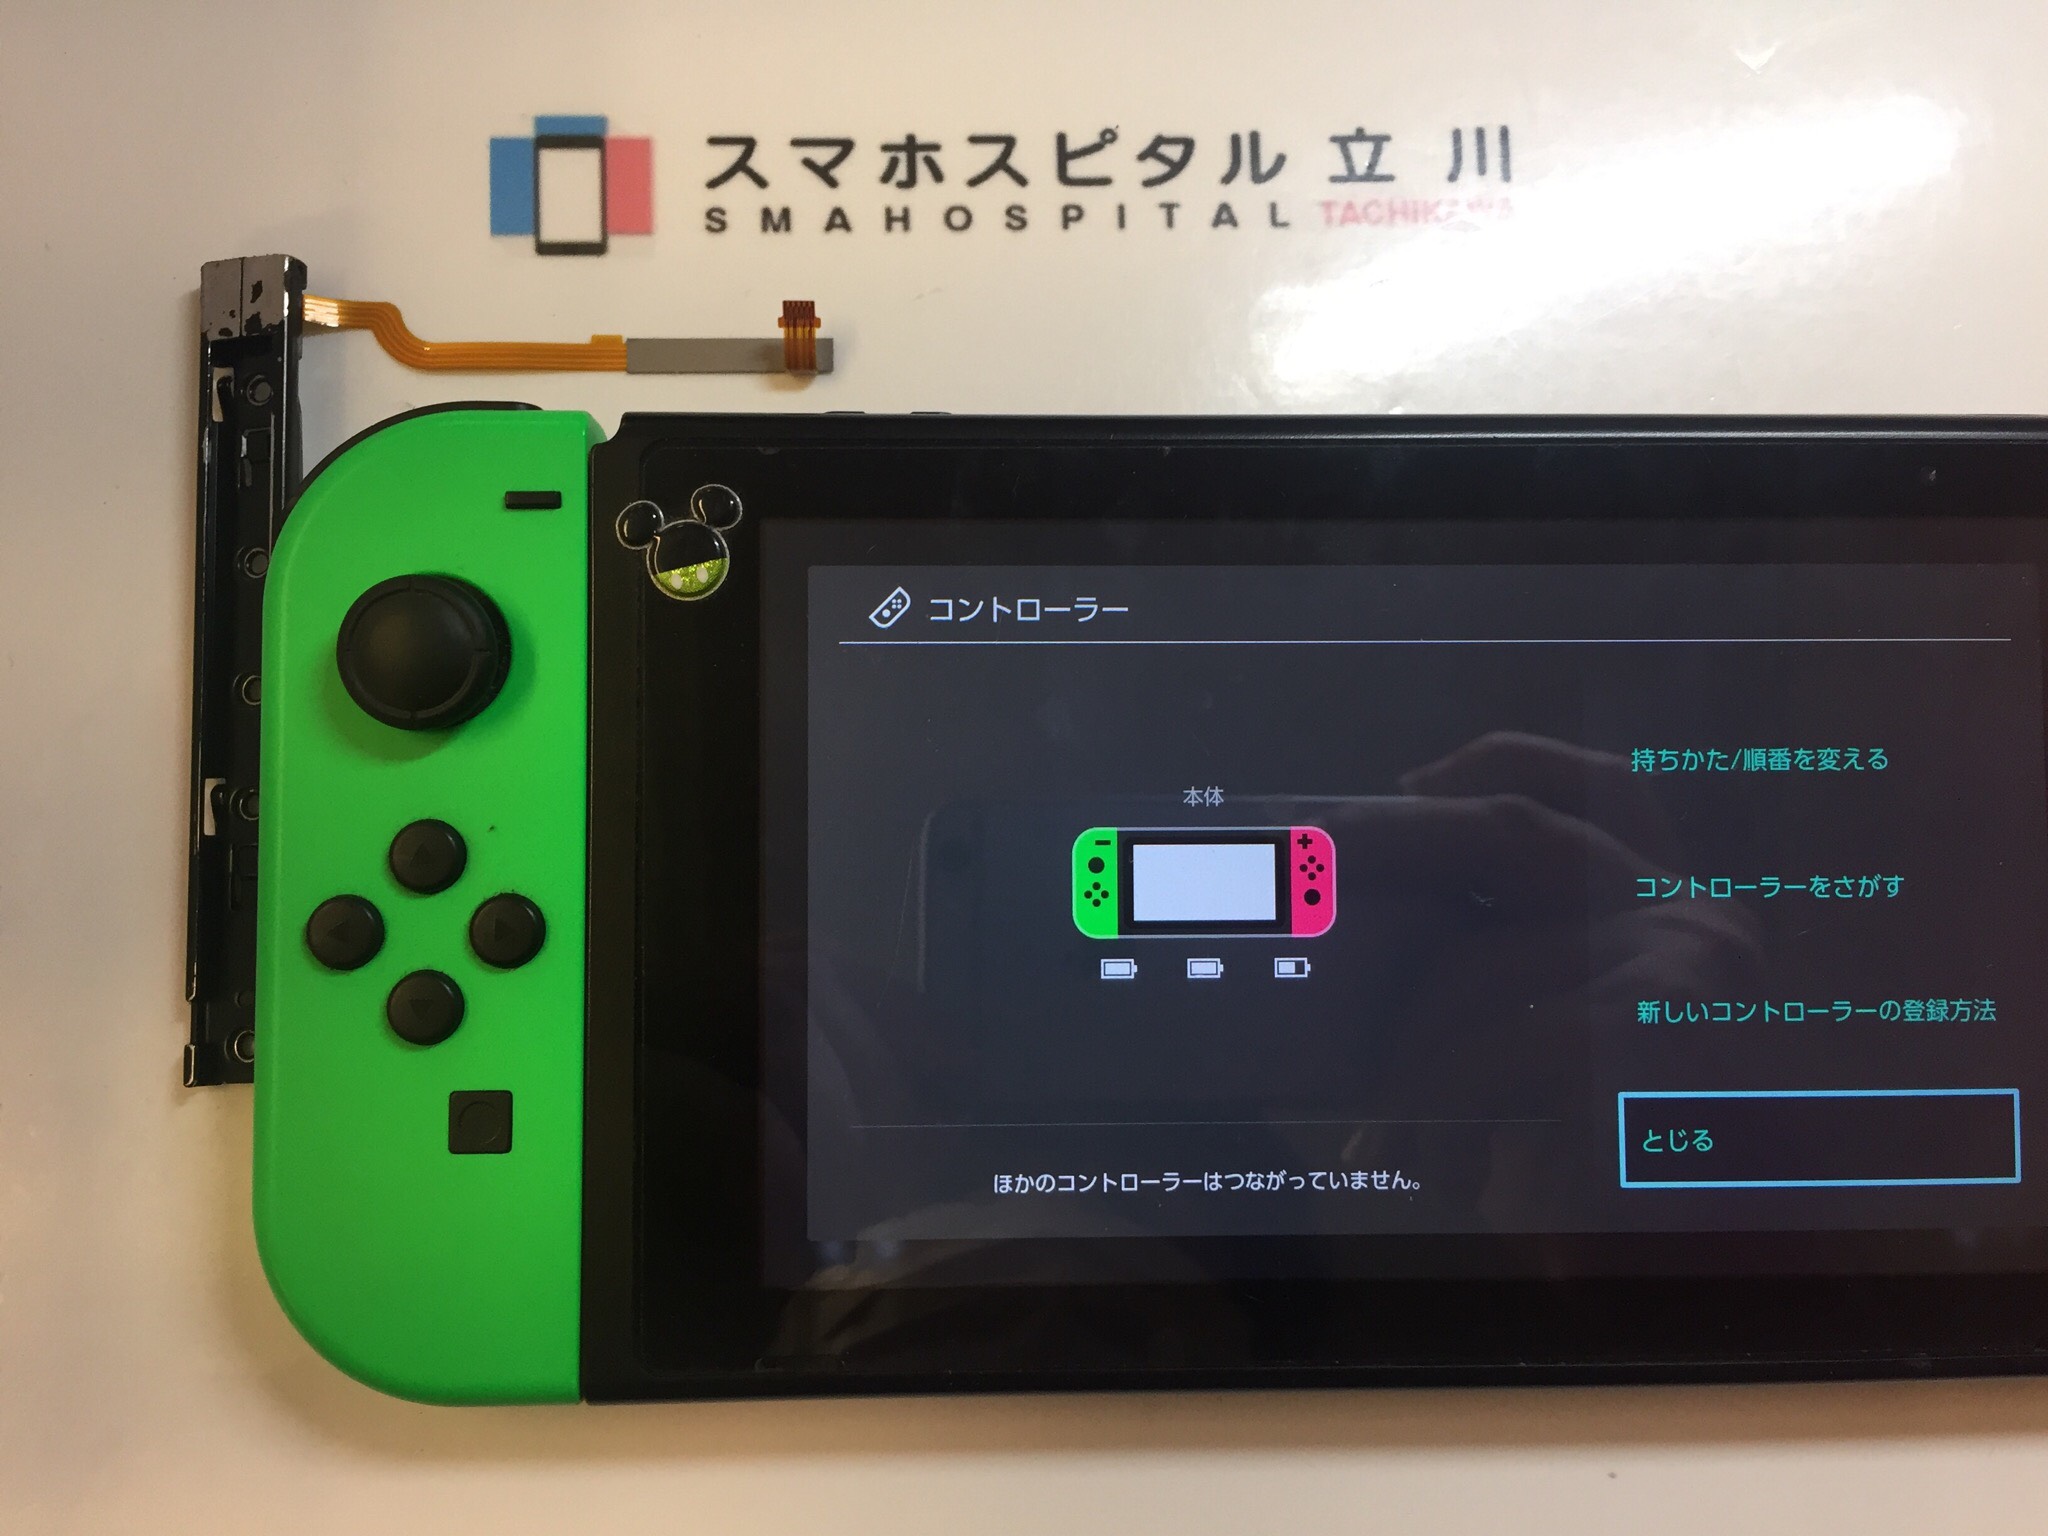 Nintendo Switch 左レールが認識しない端末の修理 Nintendo3ds Switch Psp 修理のゲームホスピタル Nintendo3ds ニンテンドーds Psp Switch 修理